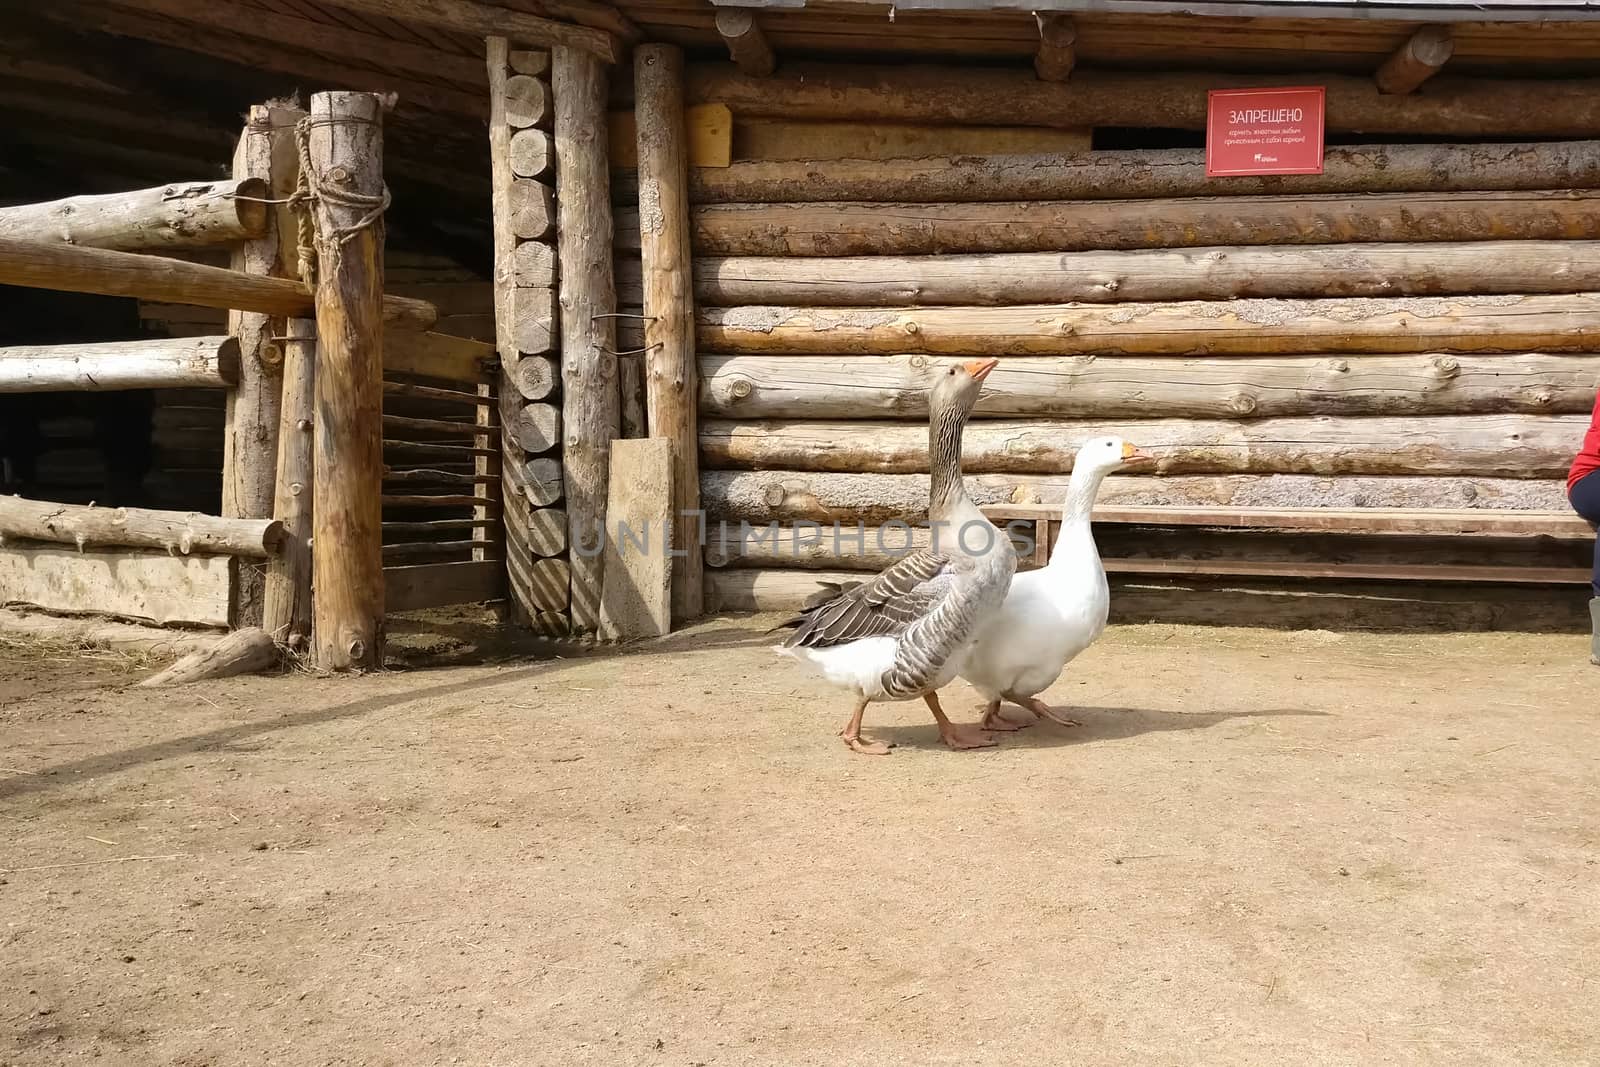 Two geese walk around the farmhouse. White and gray goose.